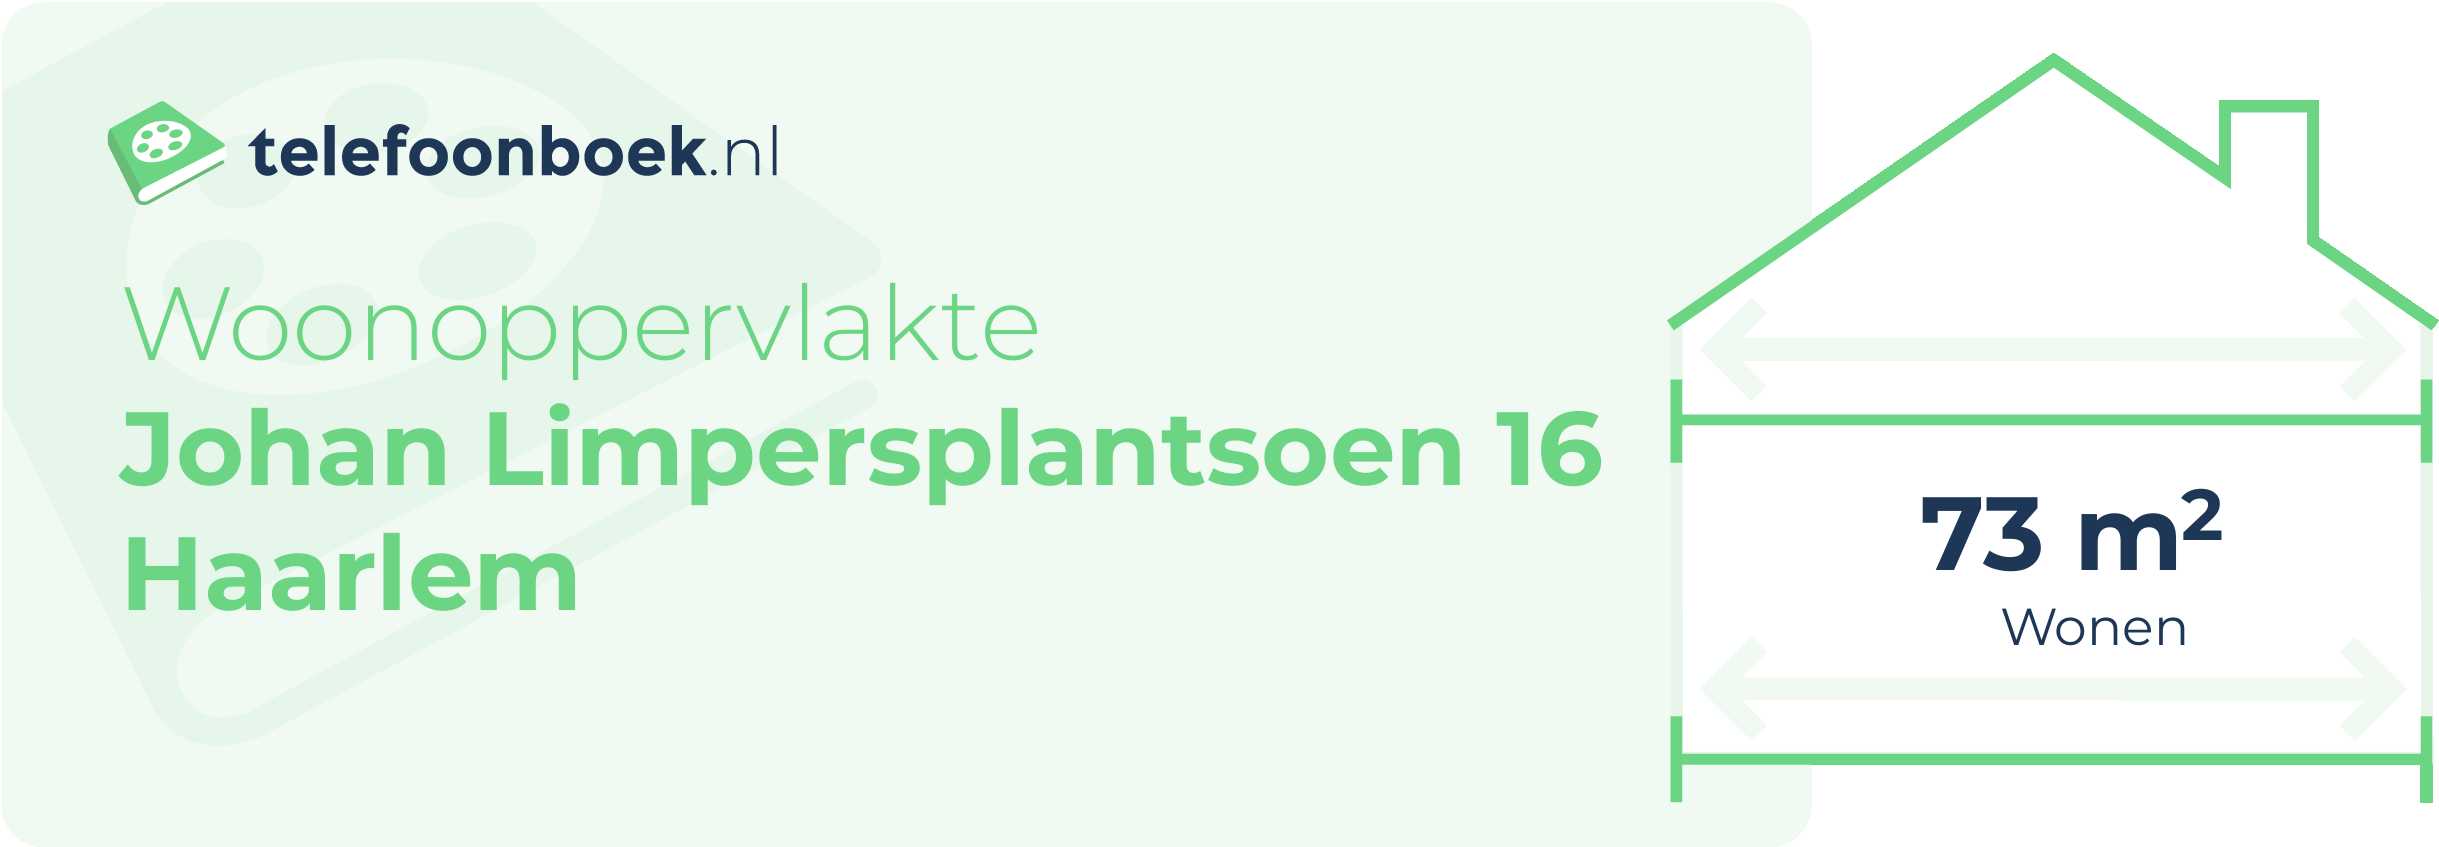 Woonoppervlakte Johan Limpersplantsoen 16 Haarlem